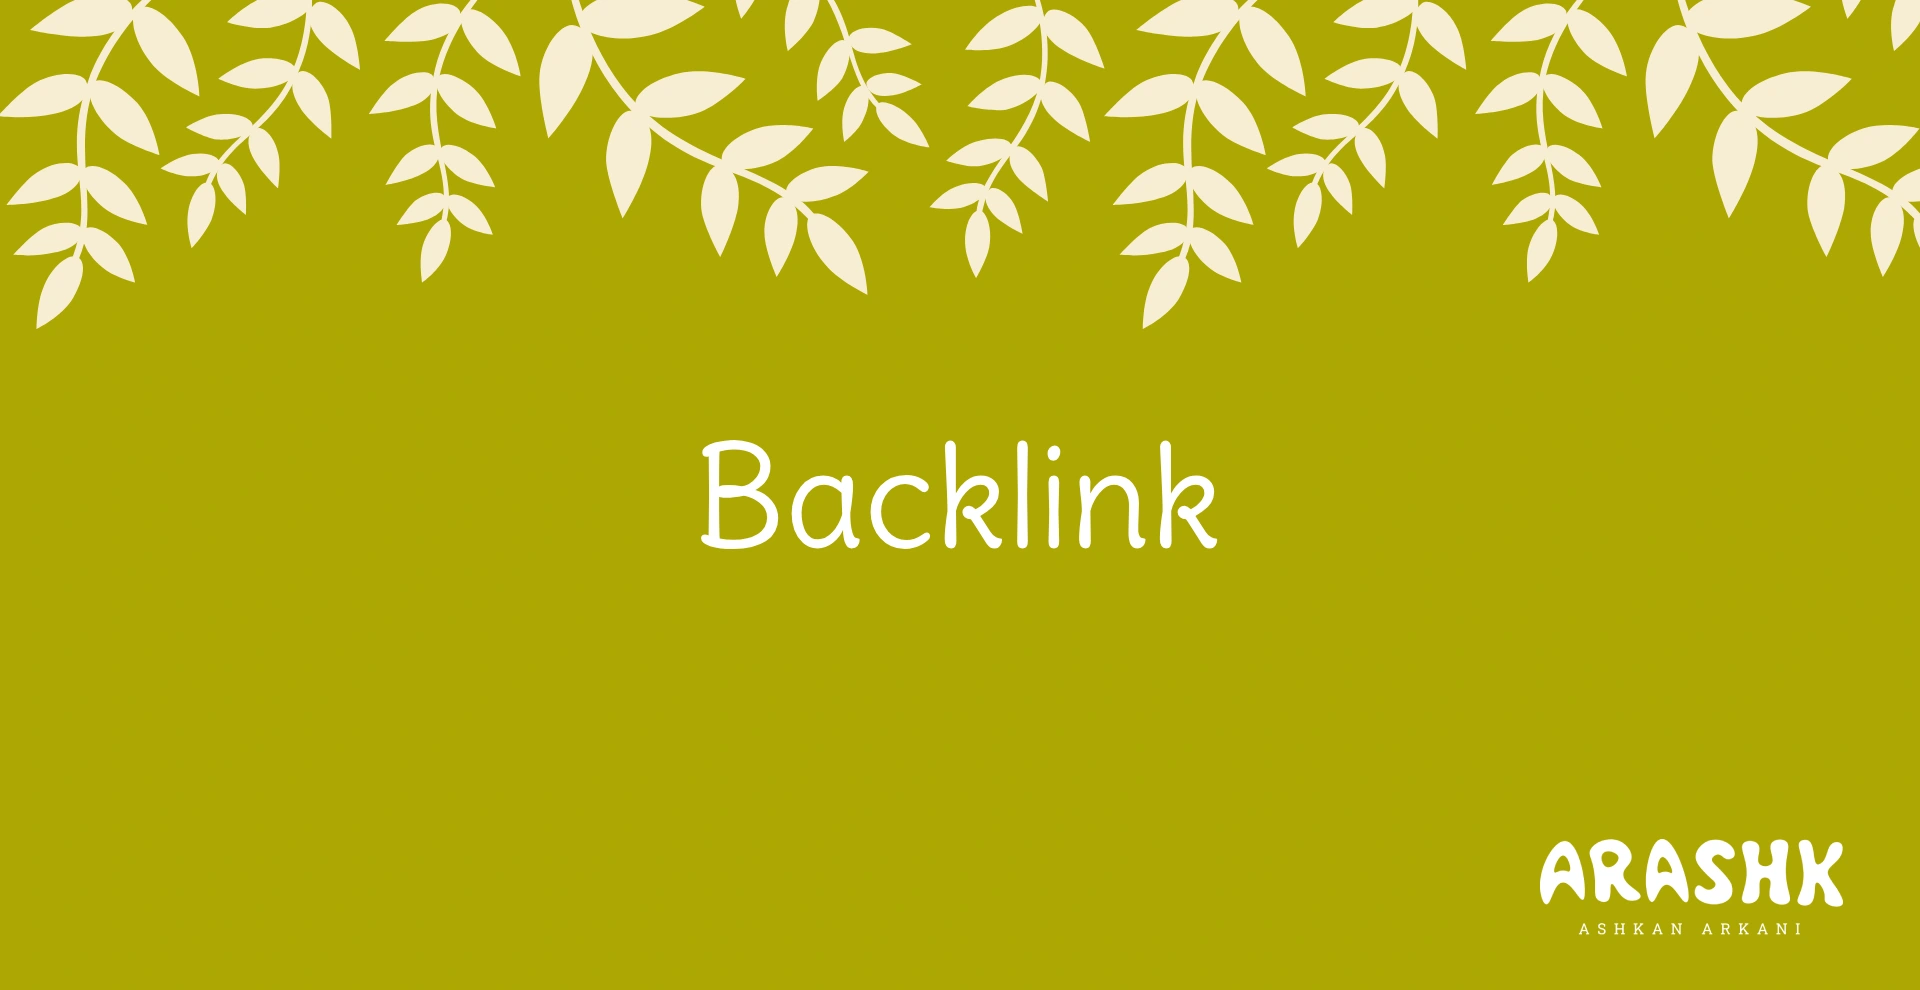 بک لینک (Backlink)